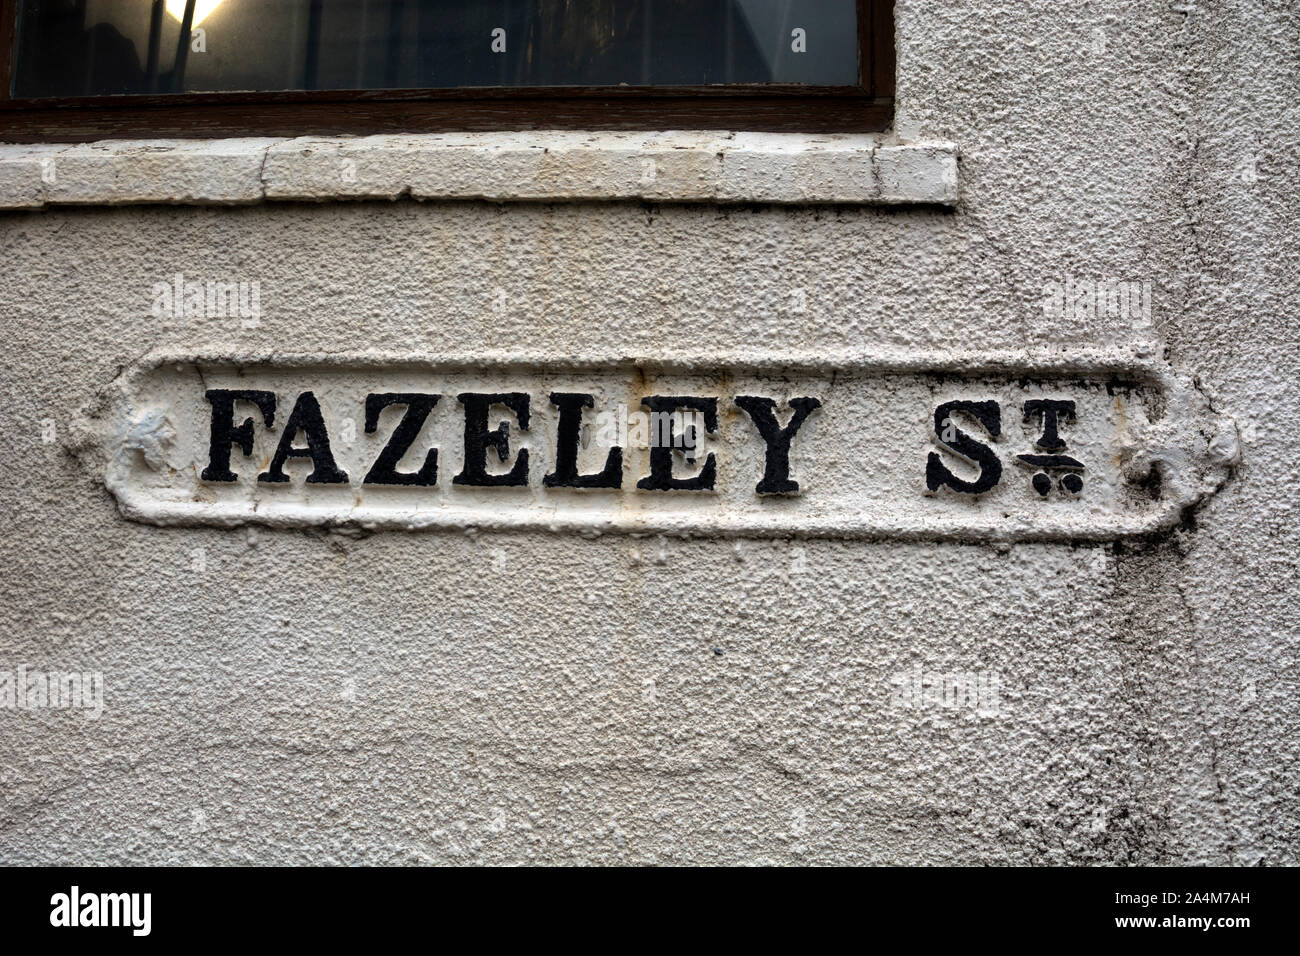 Fazeley Street sign, Digbeth, Birmingham, UK Stock Photo